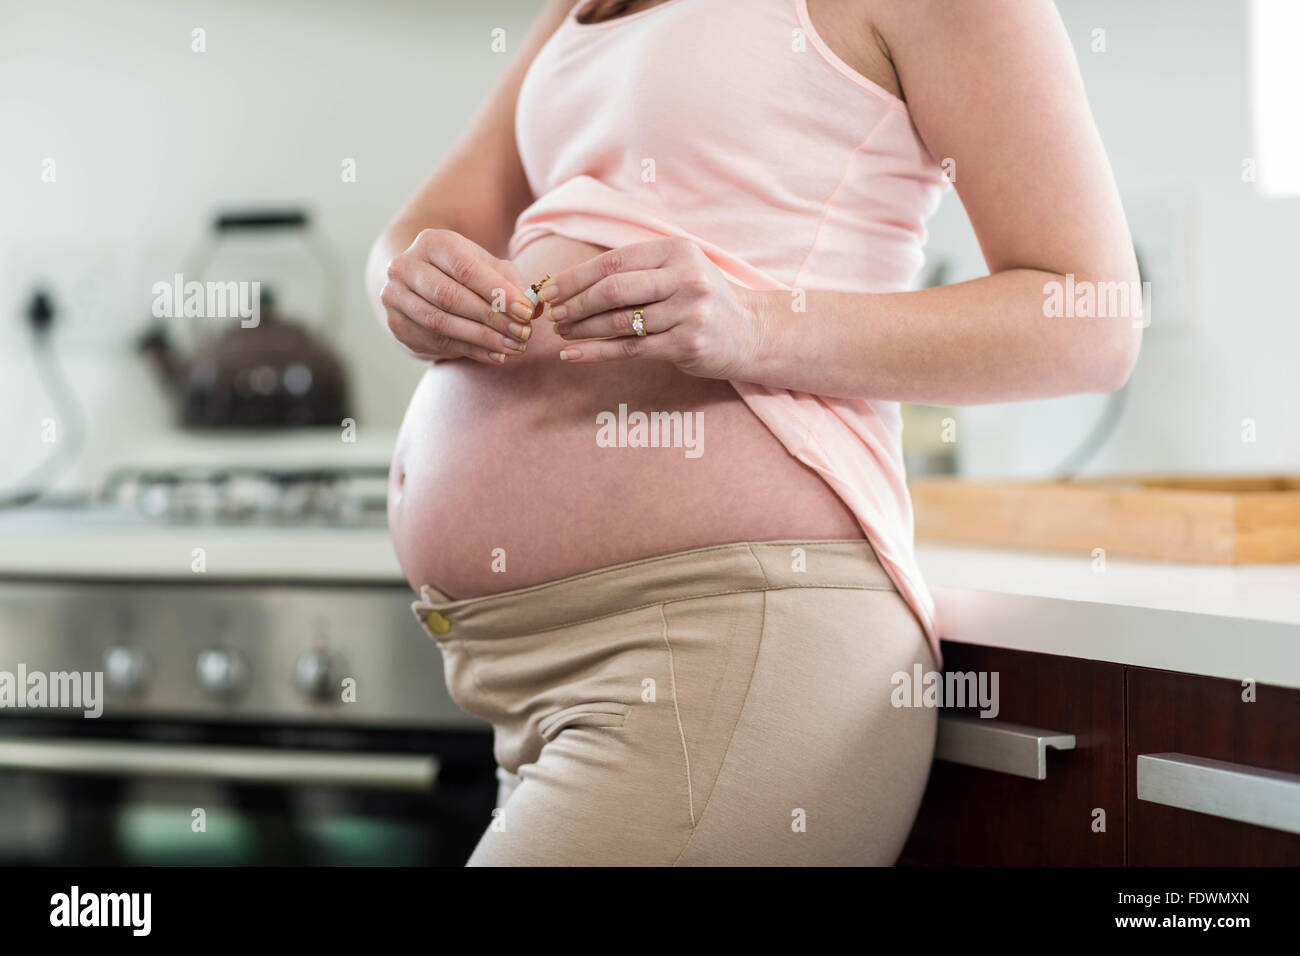 Pregnant woman destroying cigarette Stock Photo